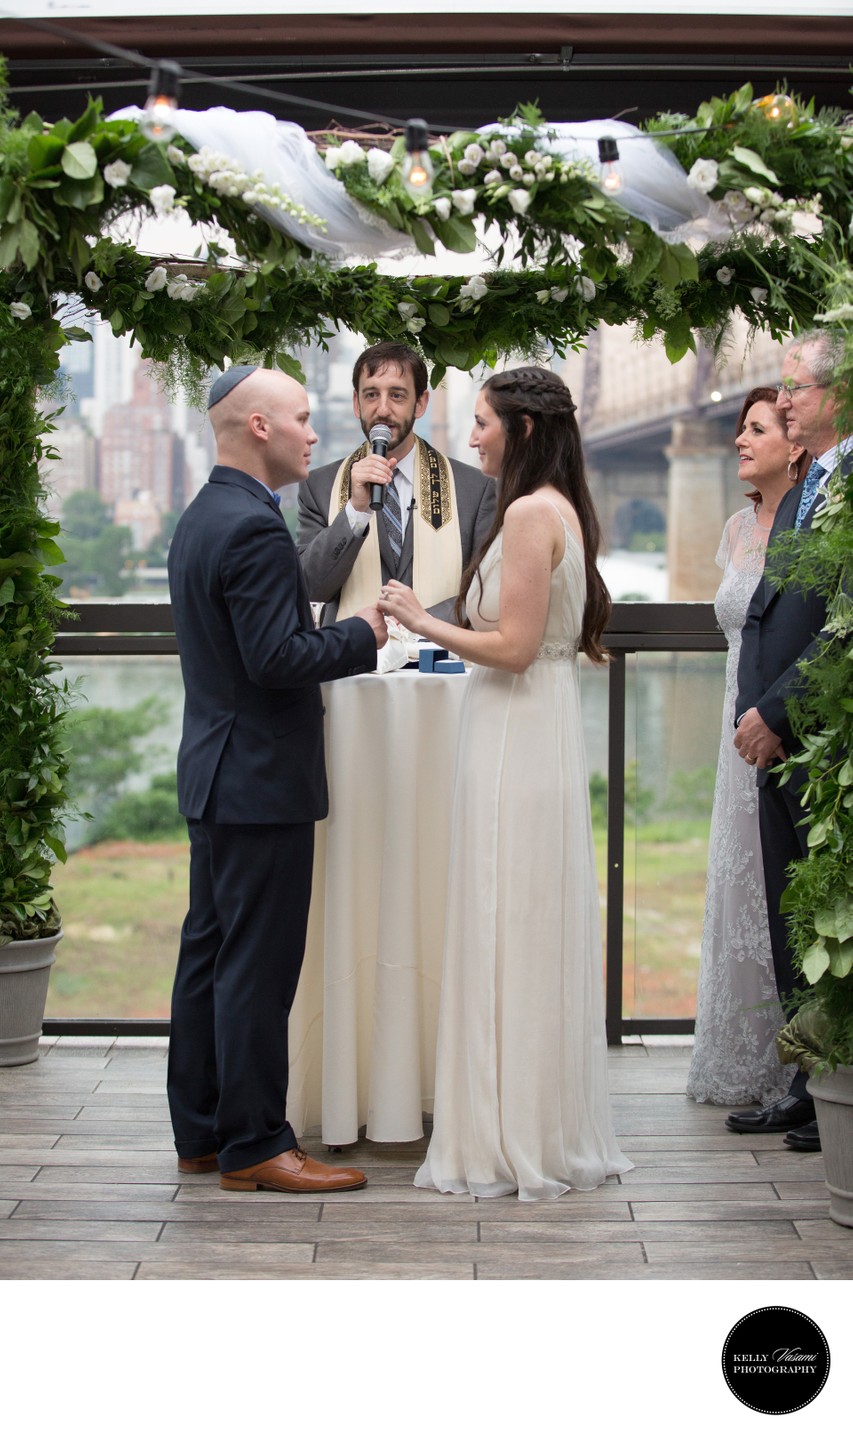 beautiful jewish wedding ceremony photos new york